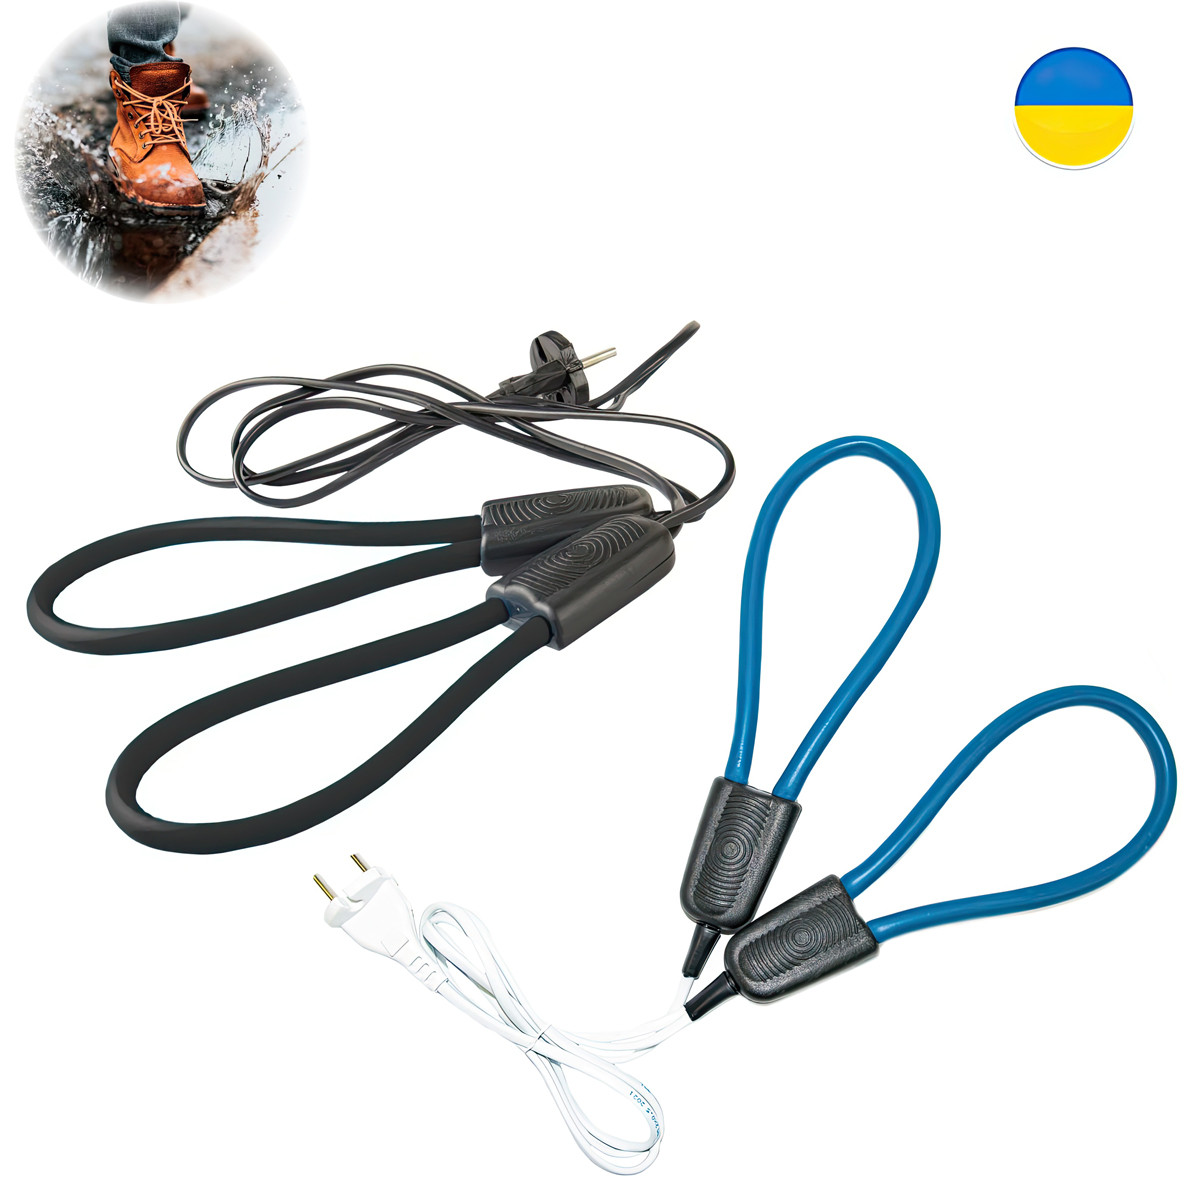 Електрична сушарка для взуття дугова Синя + Чорна Комплект 2 шт. сушка для взуття | электросушилка обуви